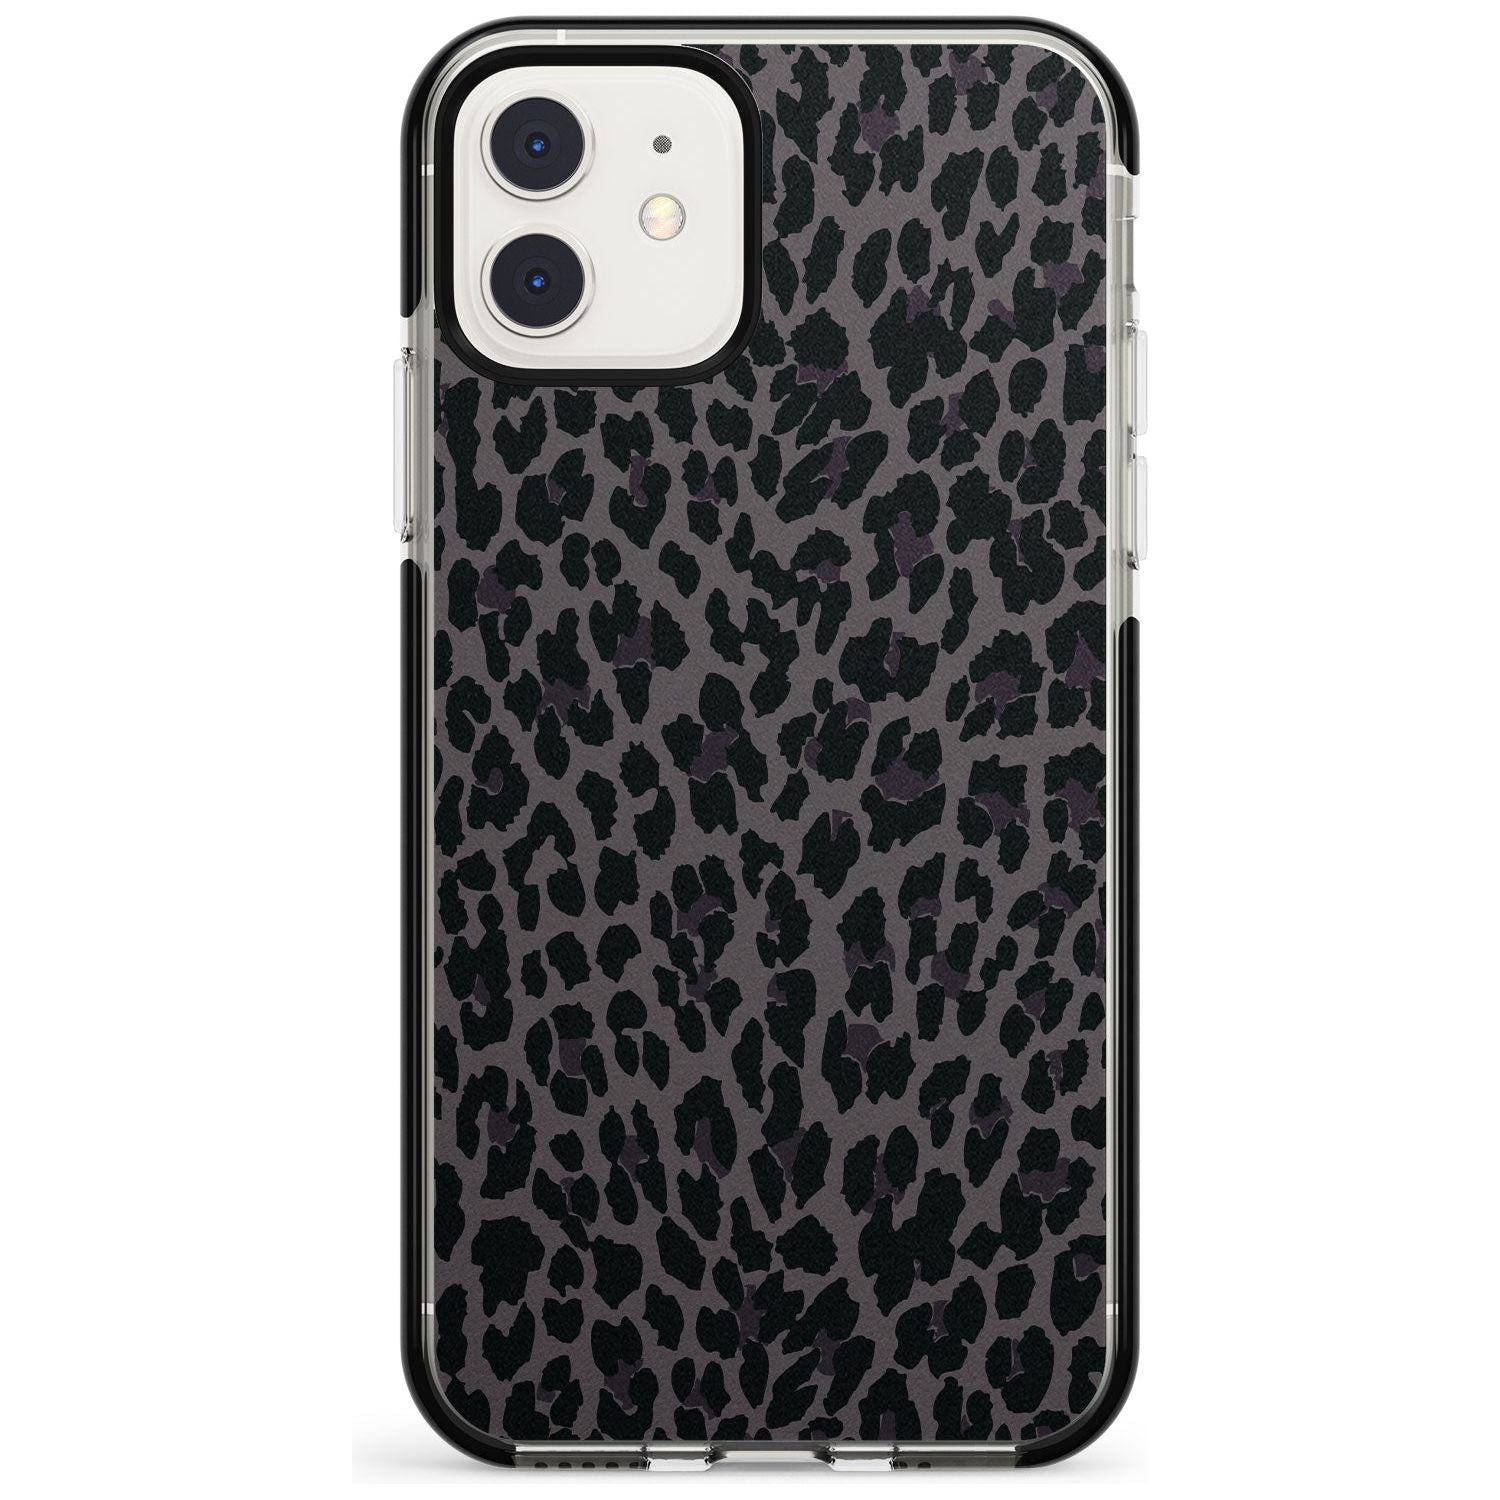 Dark Animal Print Pattern Small Leopard Black Impact Phone Case for iPhone 11